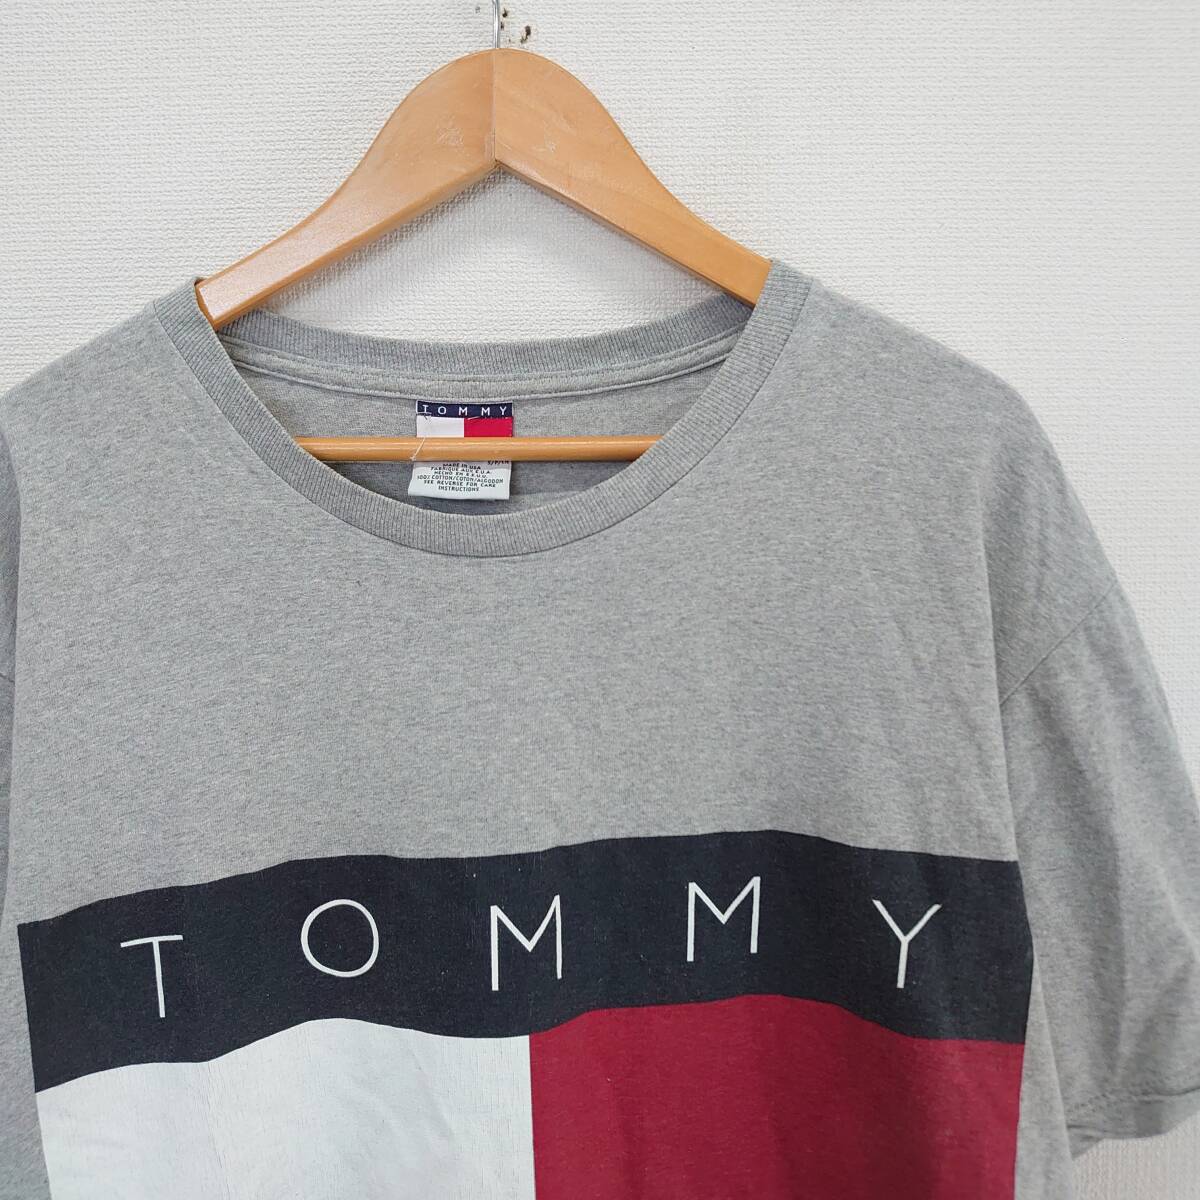 TOMMY HILFIGER トミー ヒルフィガー USA製 90’s ロゴプリント 半袖Tシャツ S 10108263の画像3